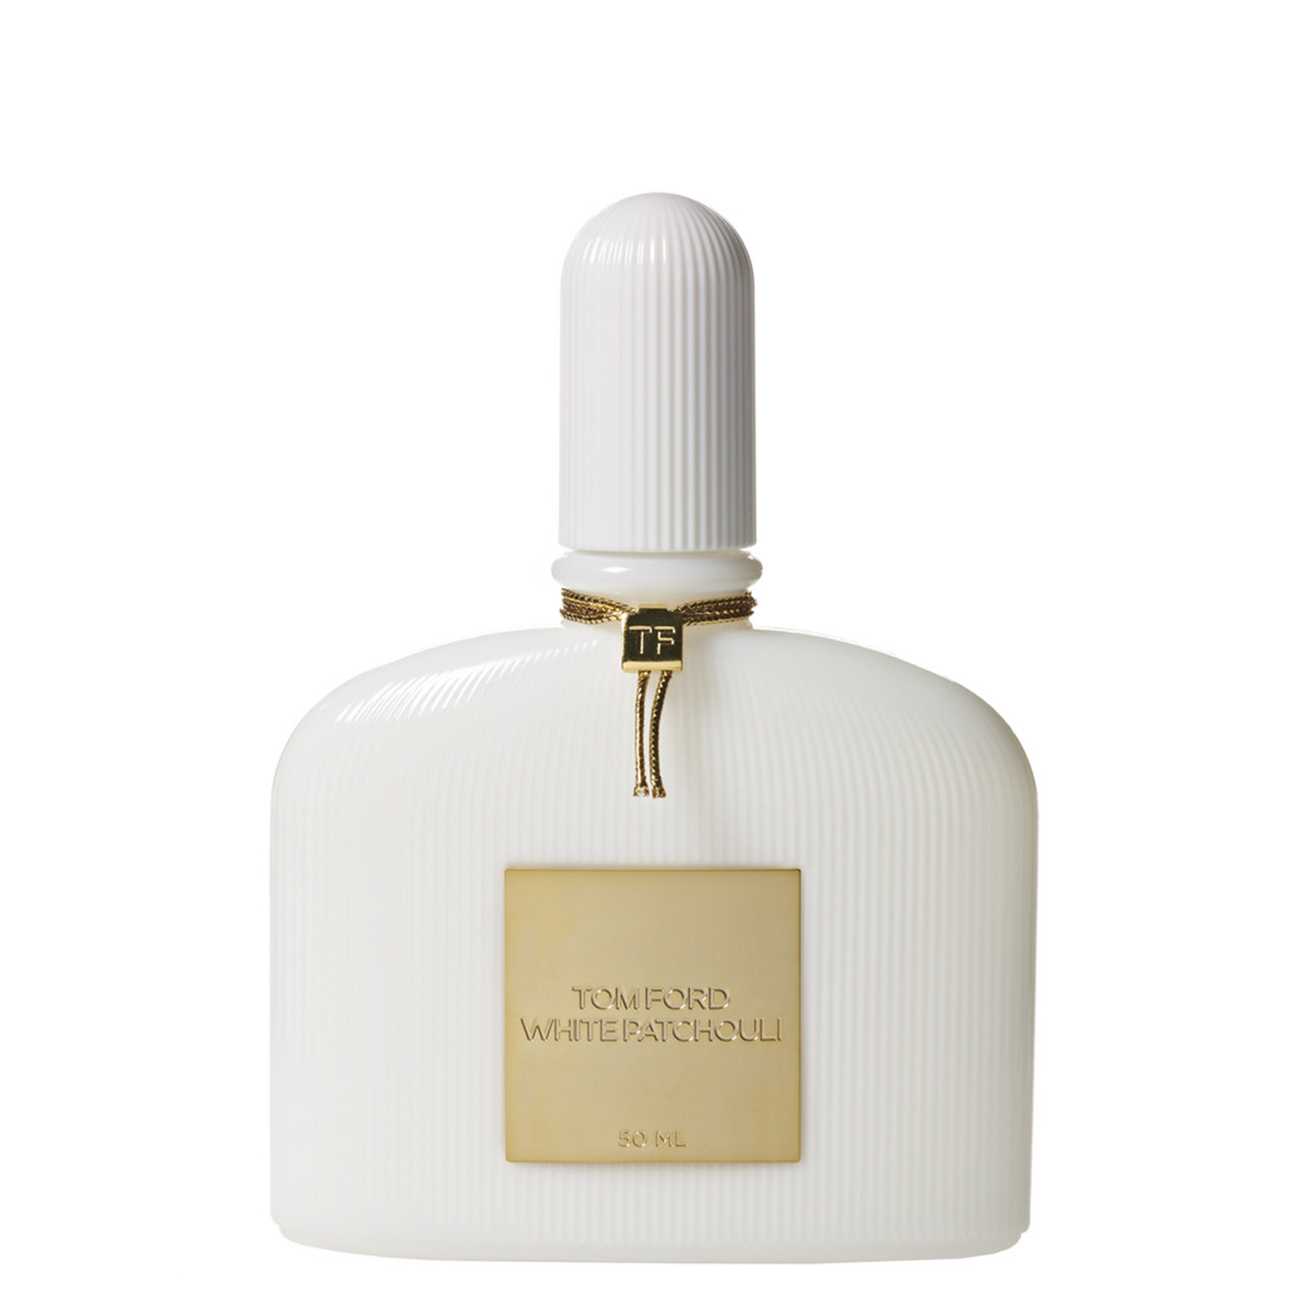 Apa de Parfum Tom Ford WHITE PATCHOULI 50ml cu comanda online